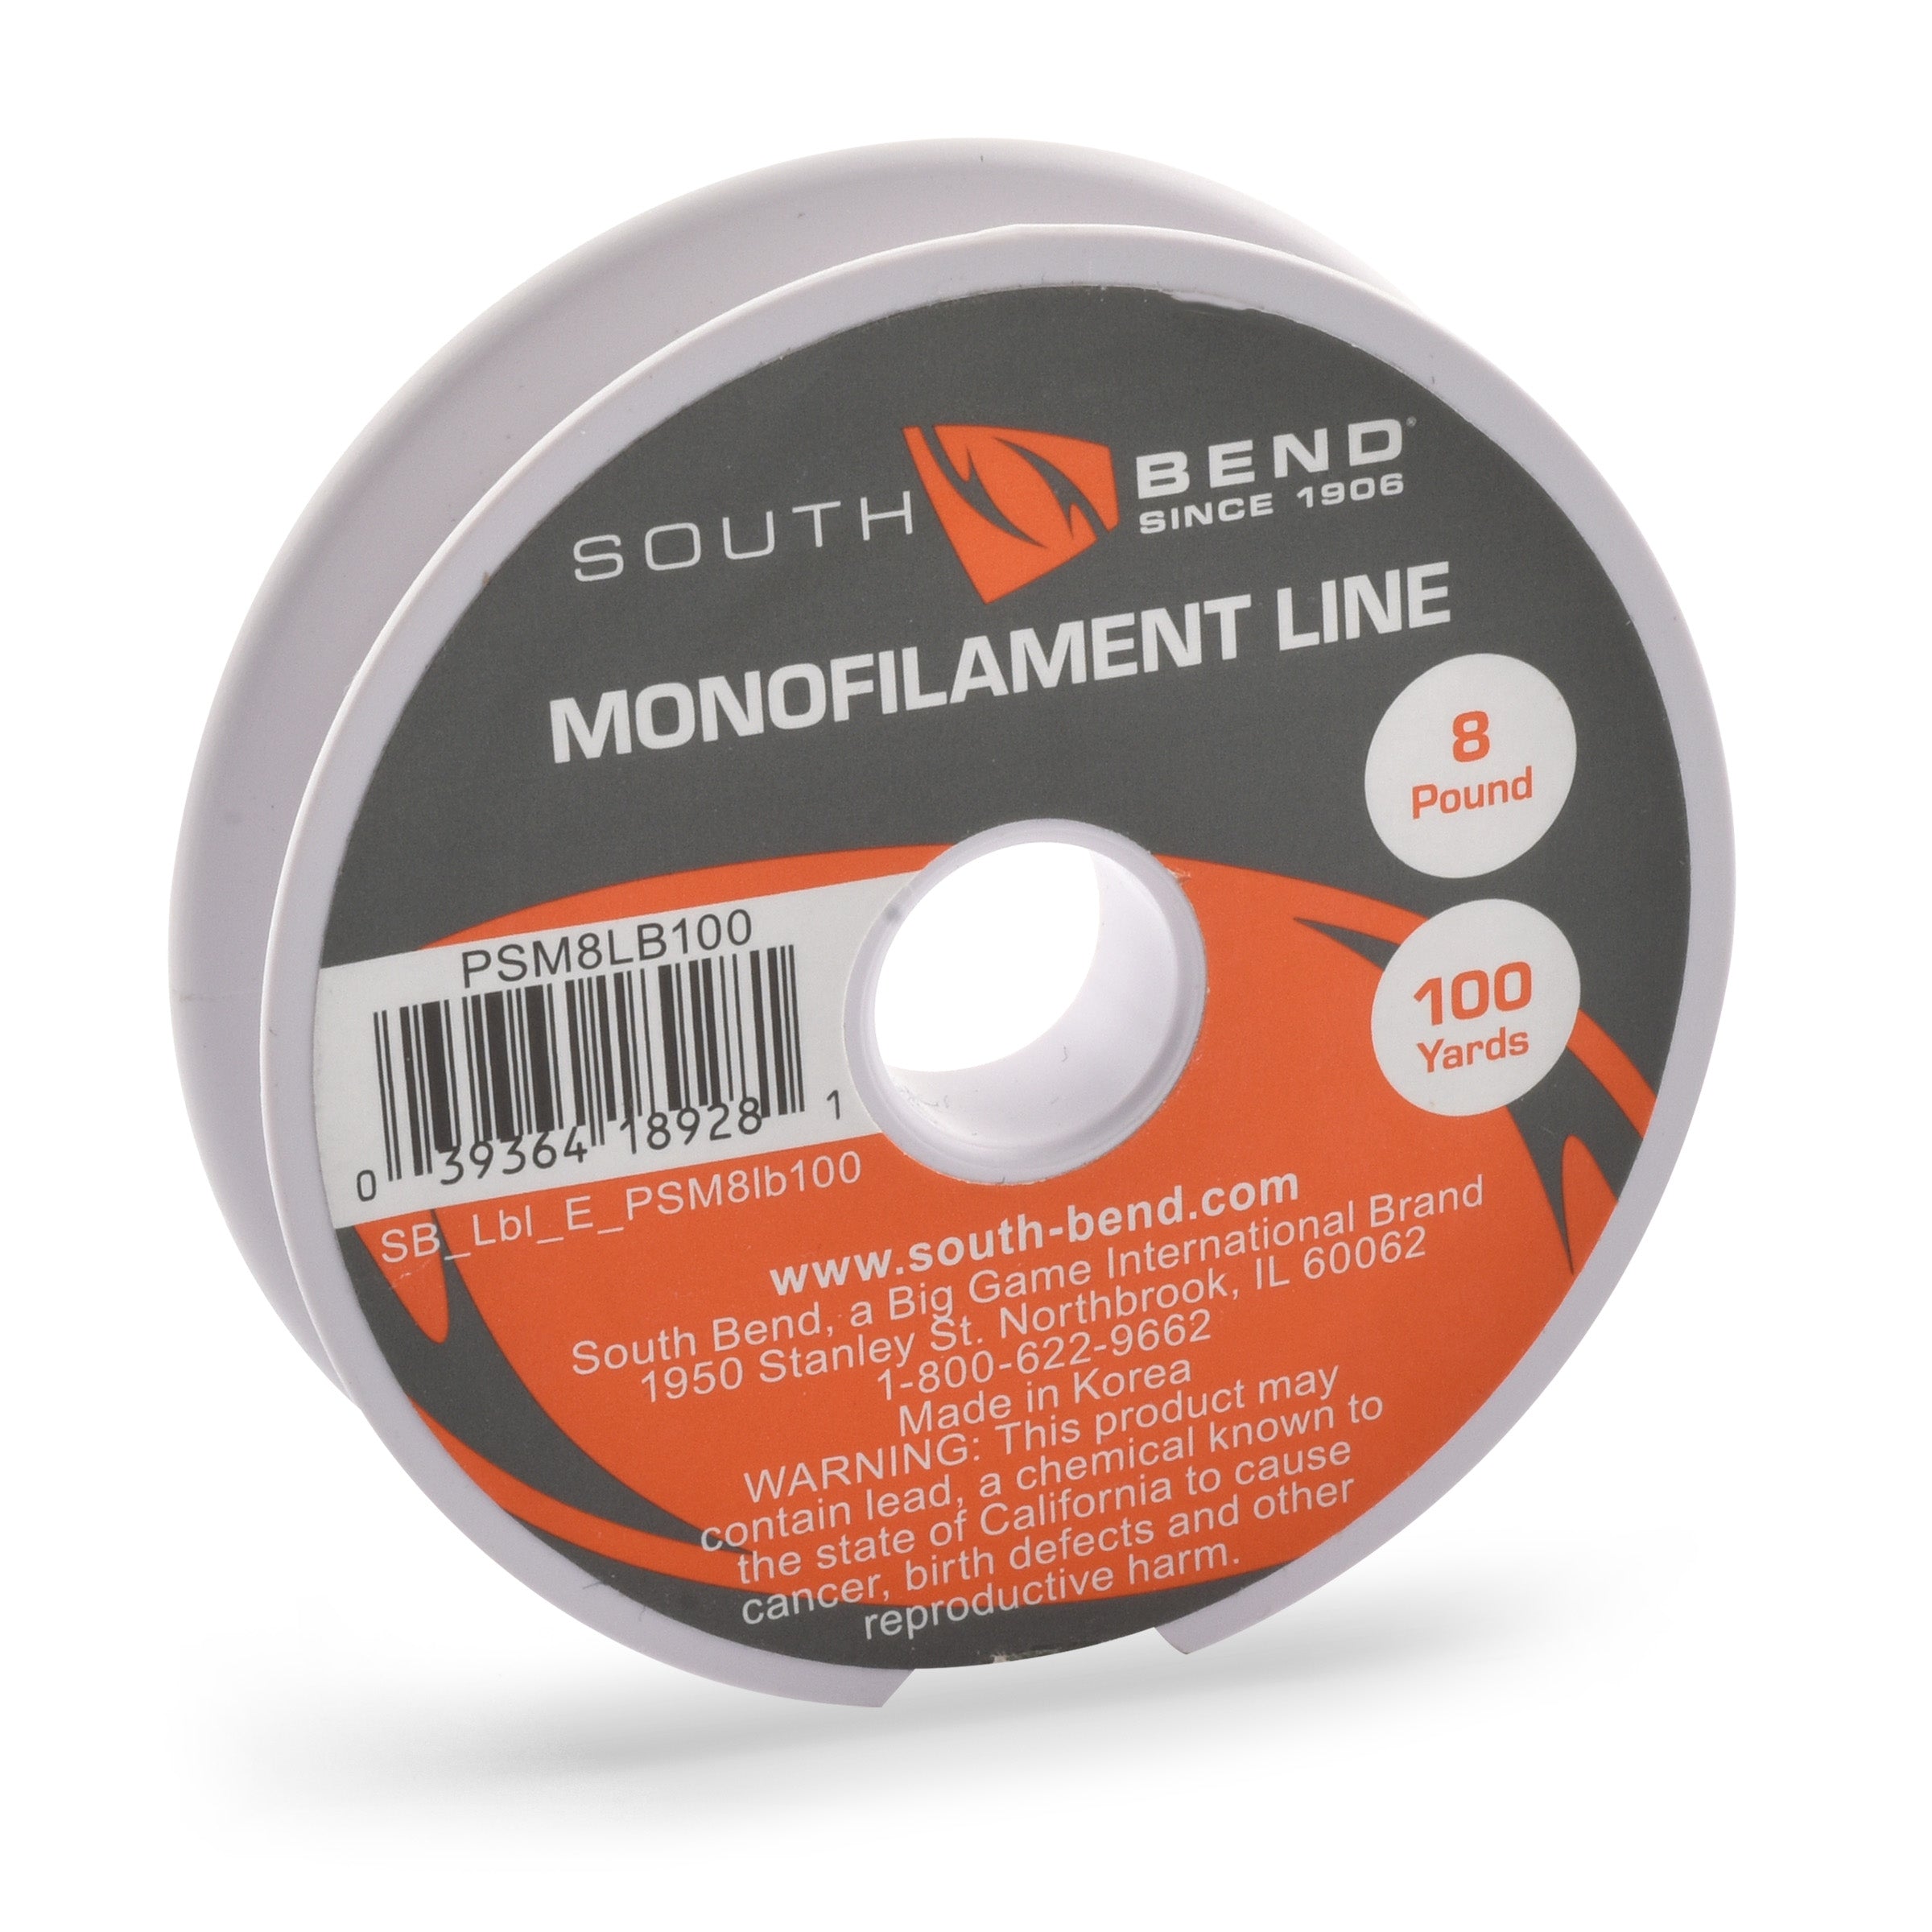 South Bend monofilament fishing line 8 lb test